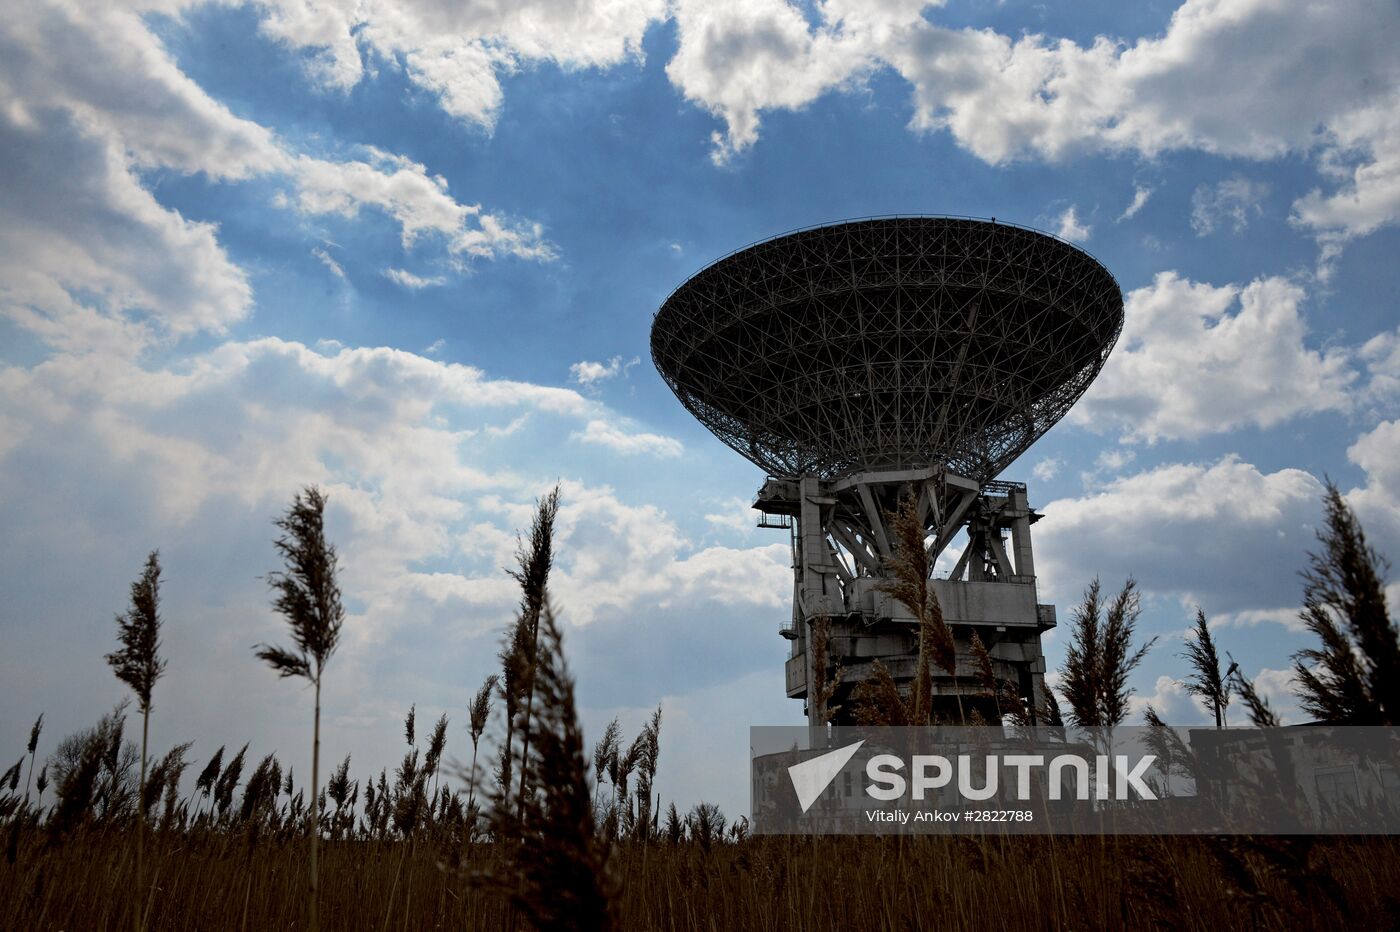 Eastern Deep Space Communication Center in Primorye Region